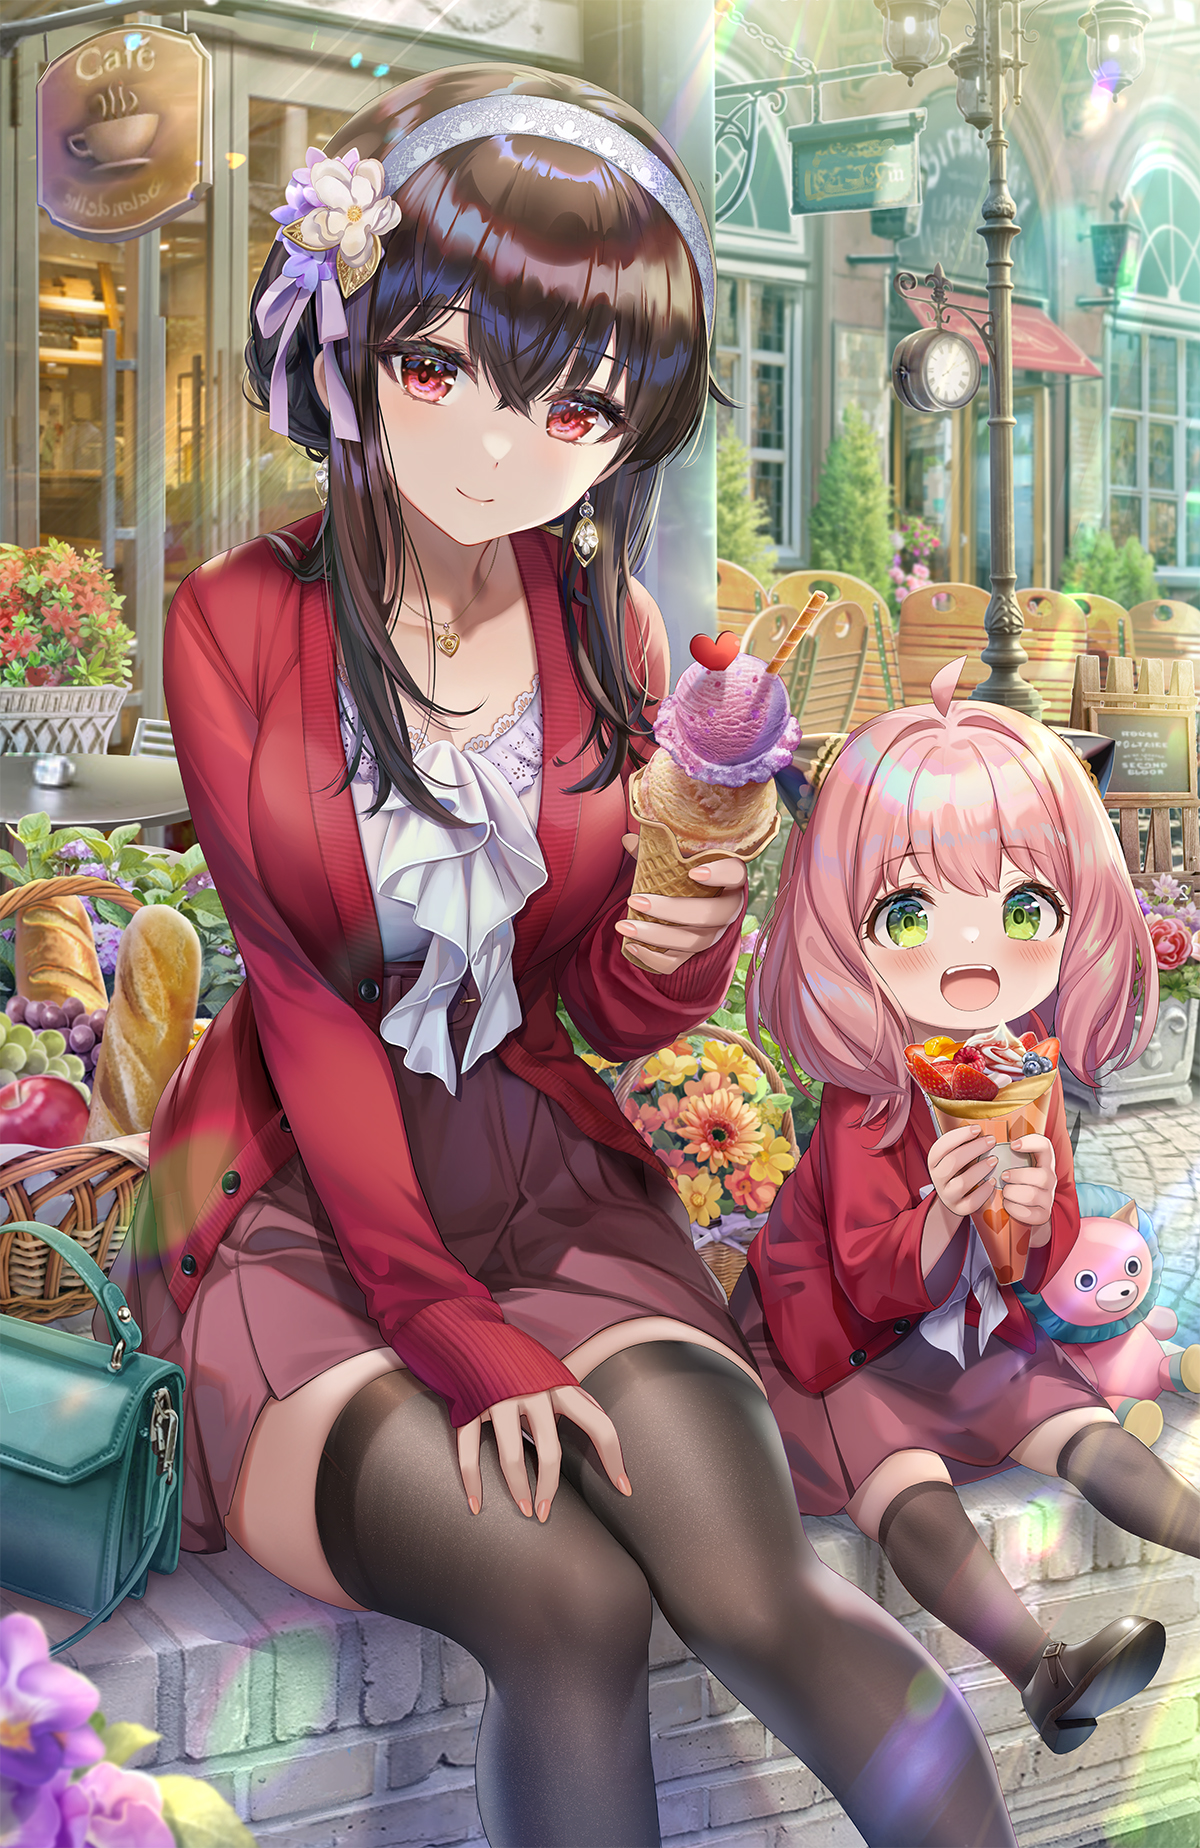 Anime 1200x1848 Torino Akua anime Spy x Family Yor Forger Anya Forger anime girls ice cream sweets bread fruit flowers stockings